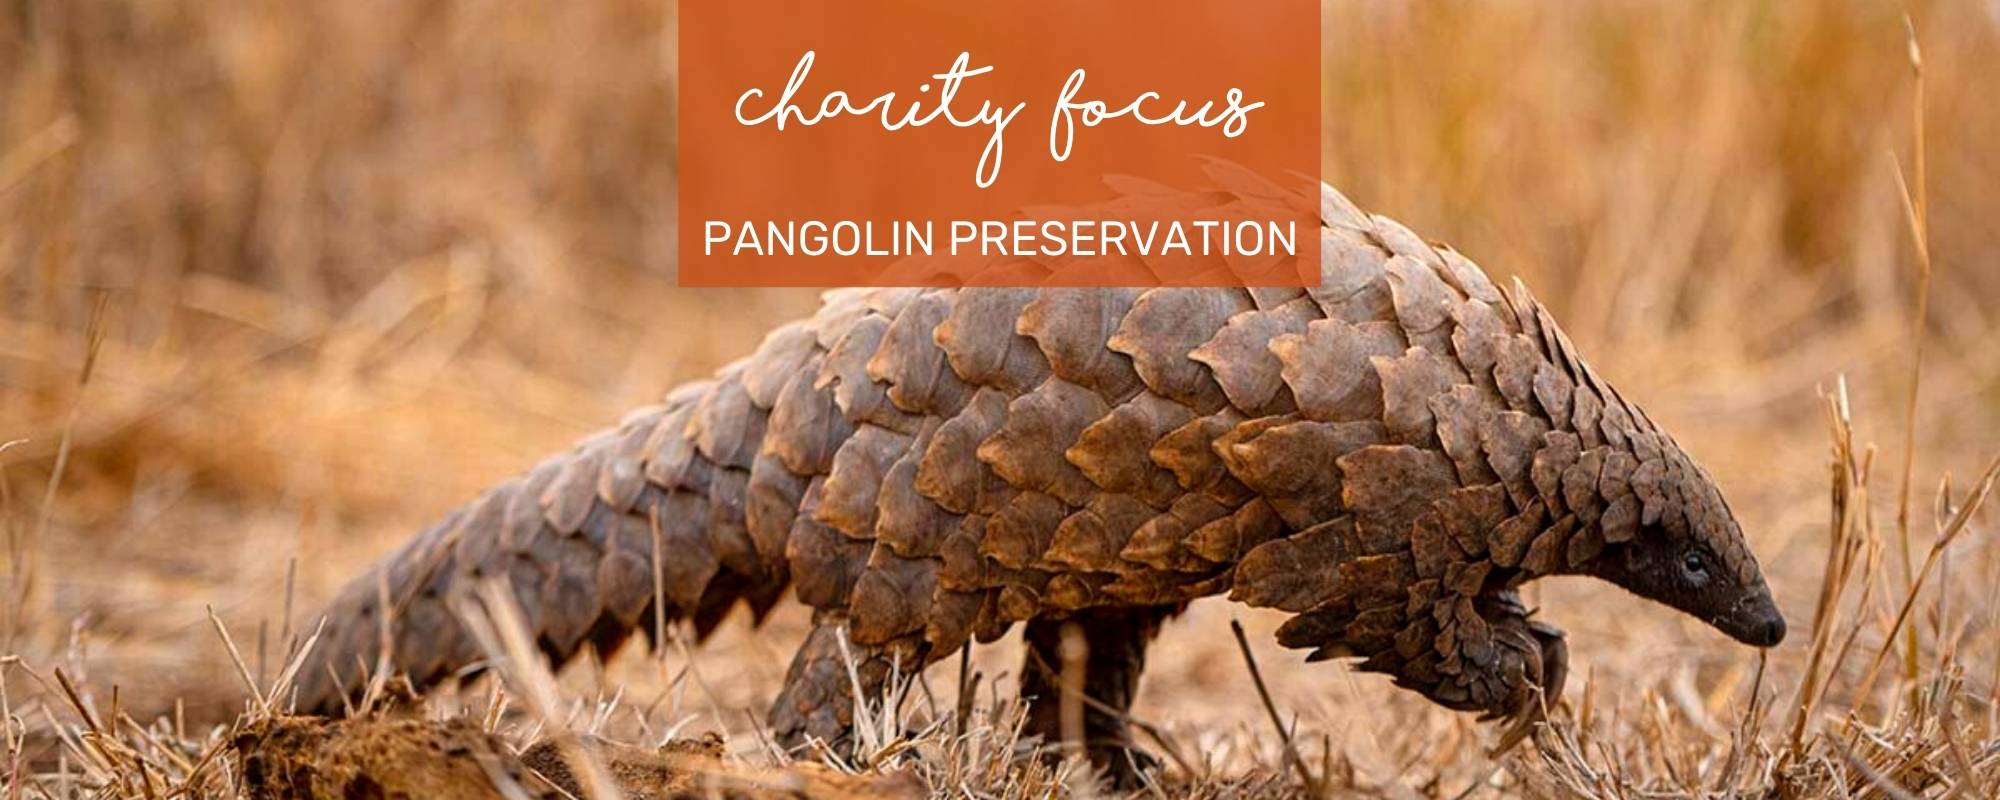 CHARITY SPOTLIGHT: PANGOLIN PRESERVATION